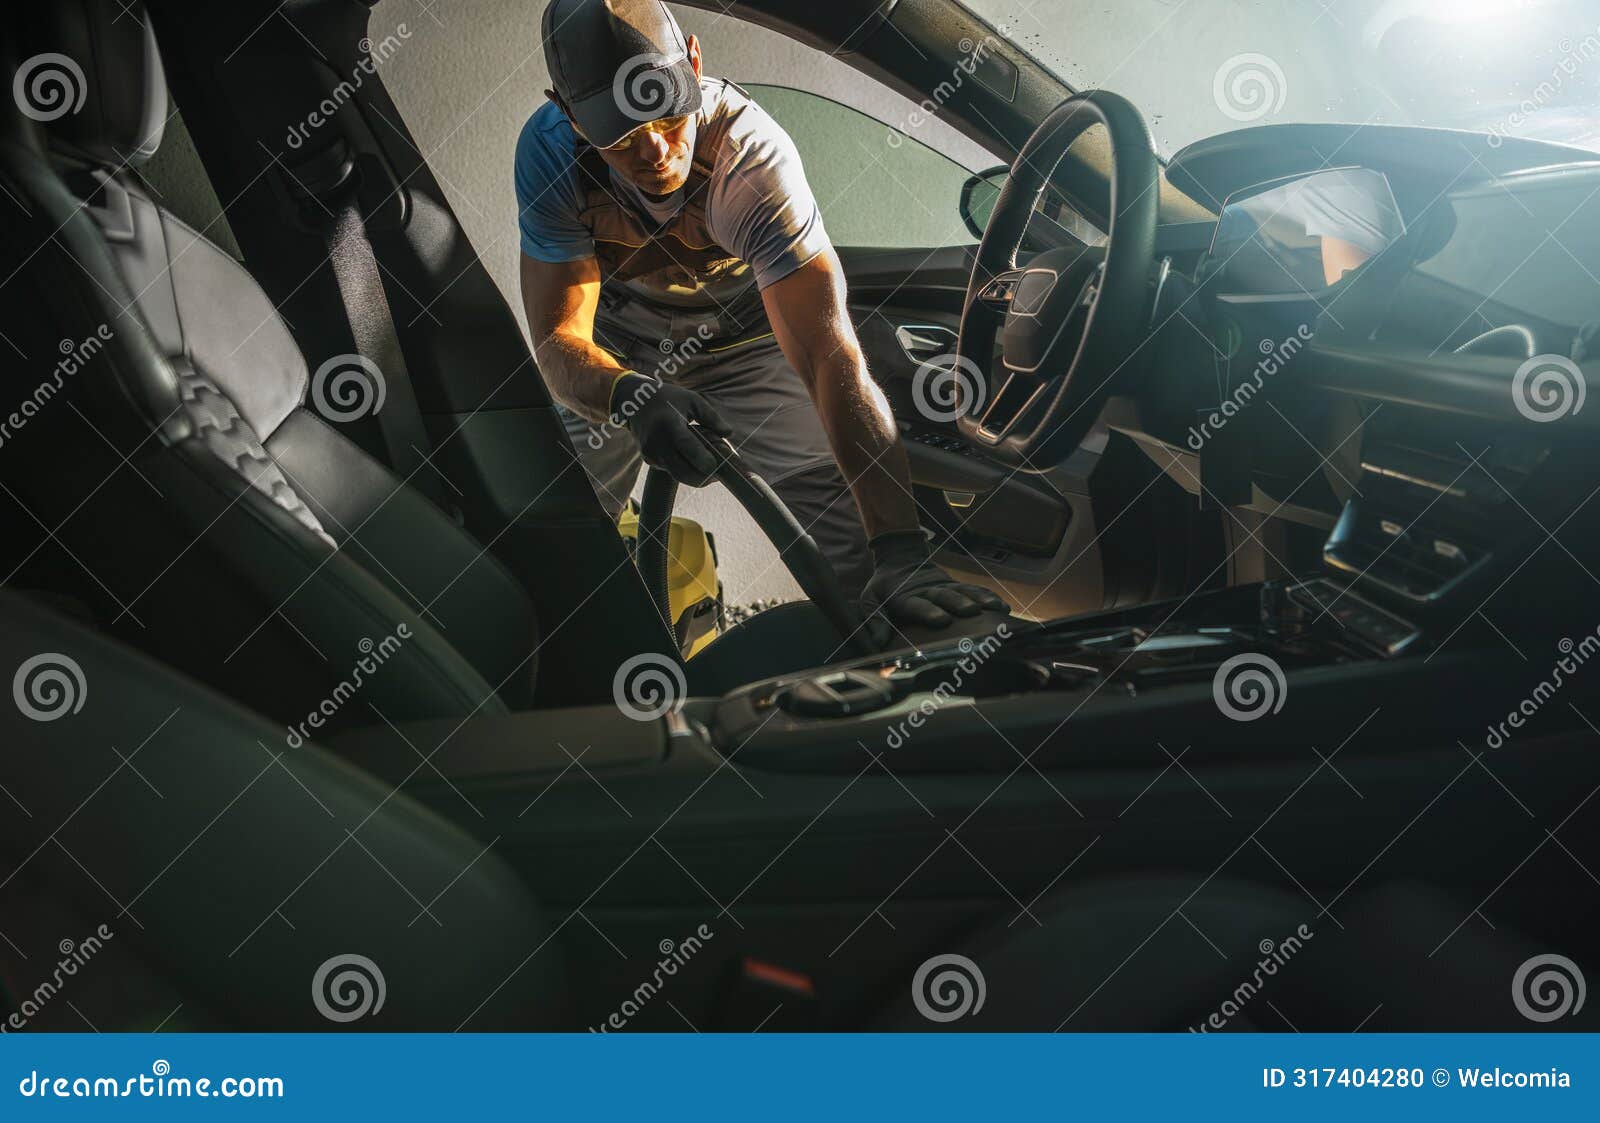 car owner vacuuming his vehicle interior